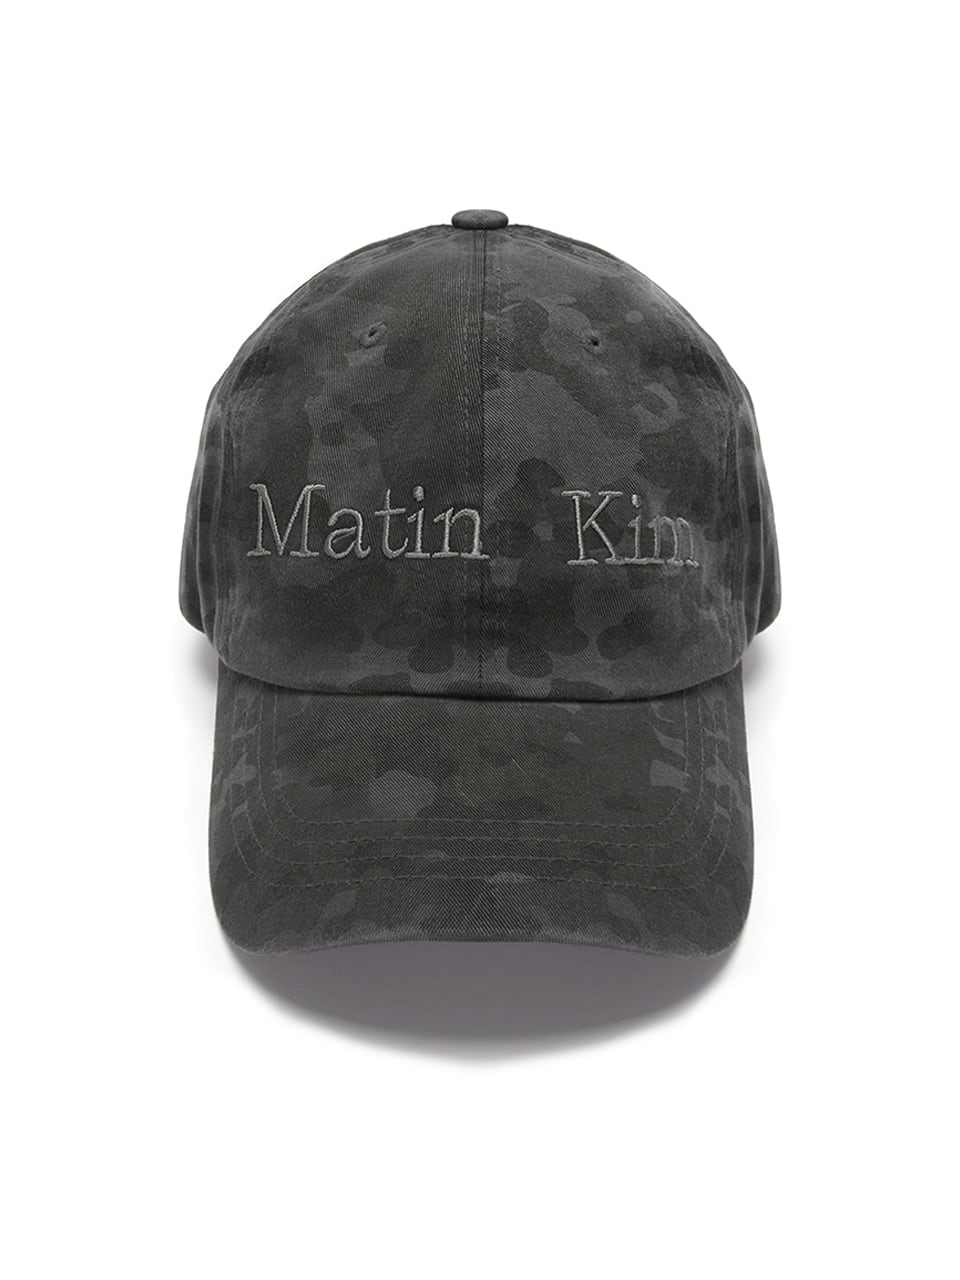 [Matin Kim] MATIN CAMOUFLAGE CAP IN CHARCOAL 正規品 韓国ブランド 韓国ファッション 韓国代行  マーティンキム matinkim | BONZ (韓国ブランド 代行) powered by BASE